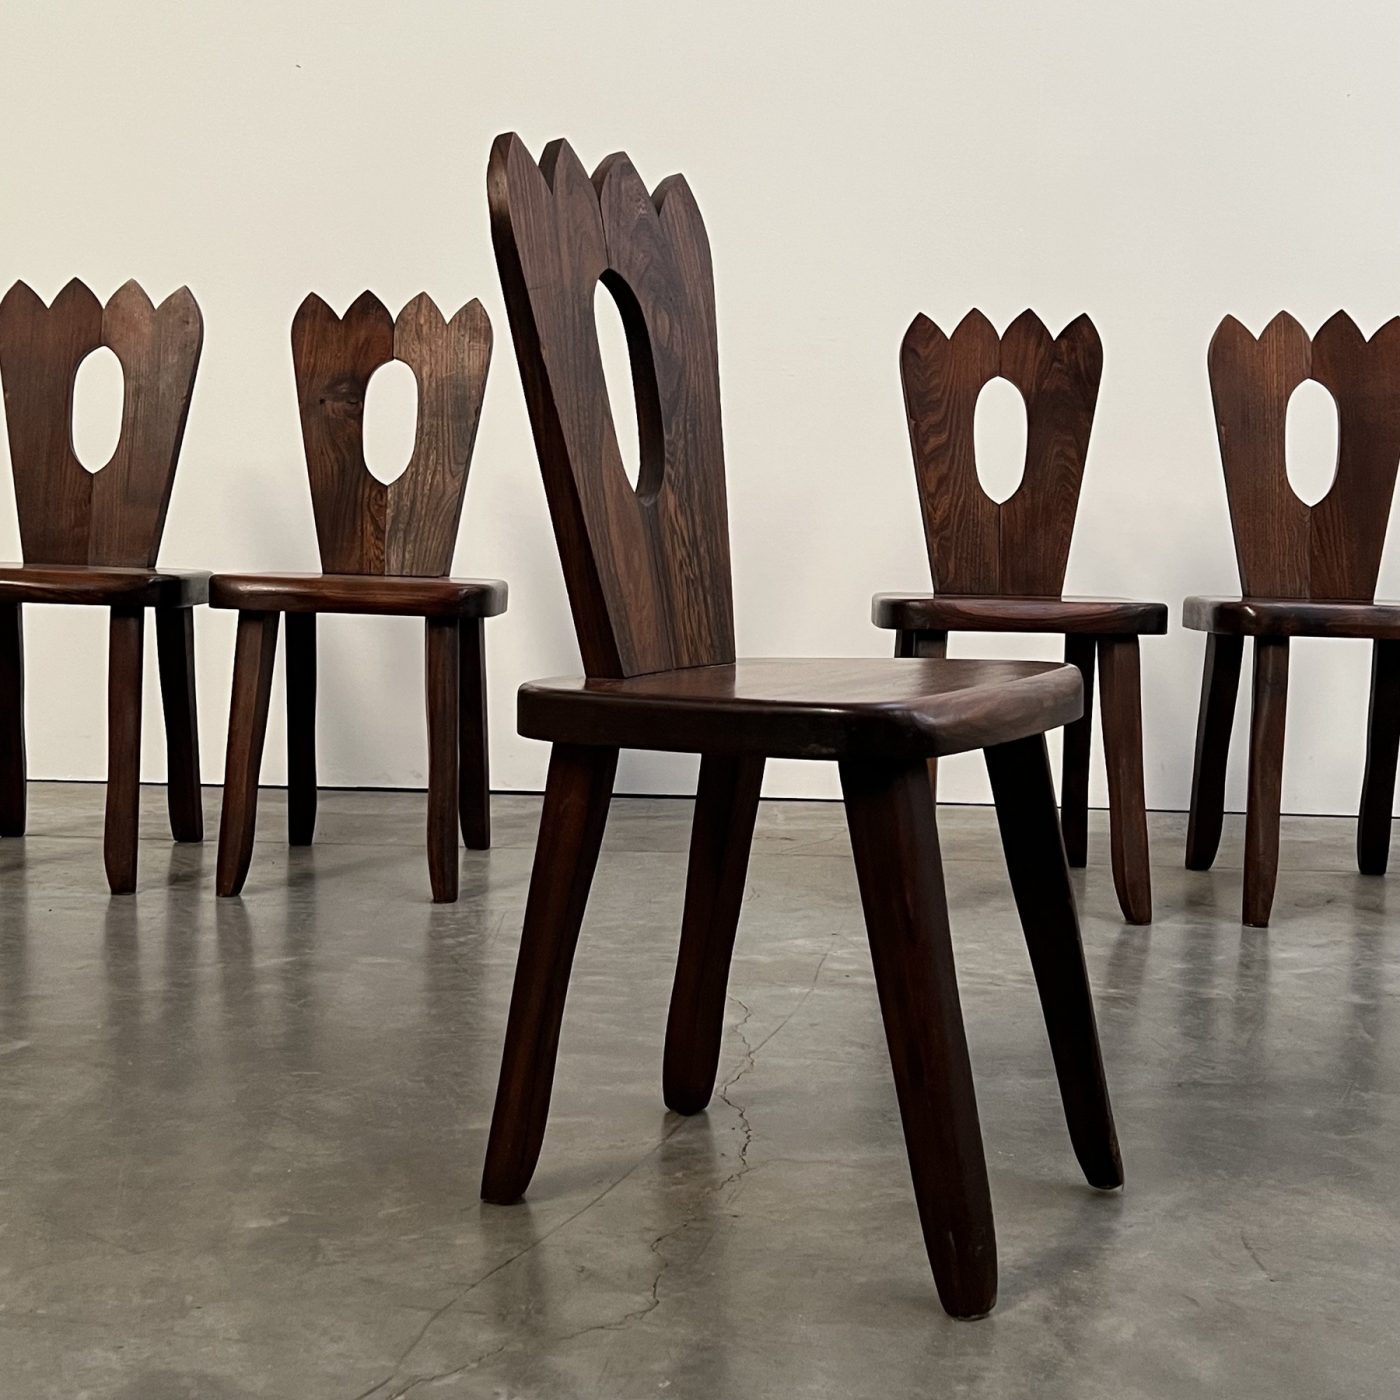 objet-vagabond-brutalist-chairs0004